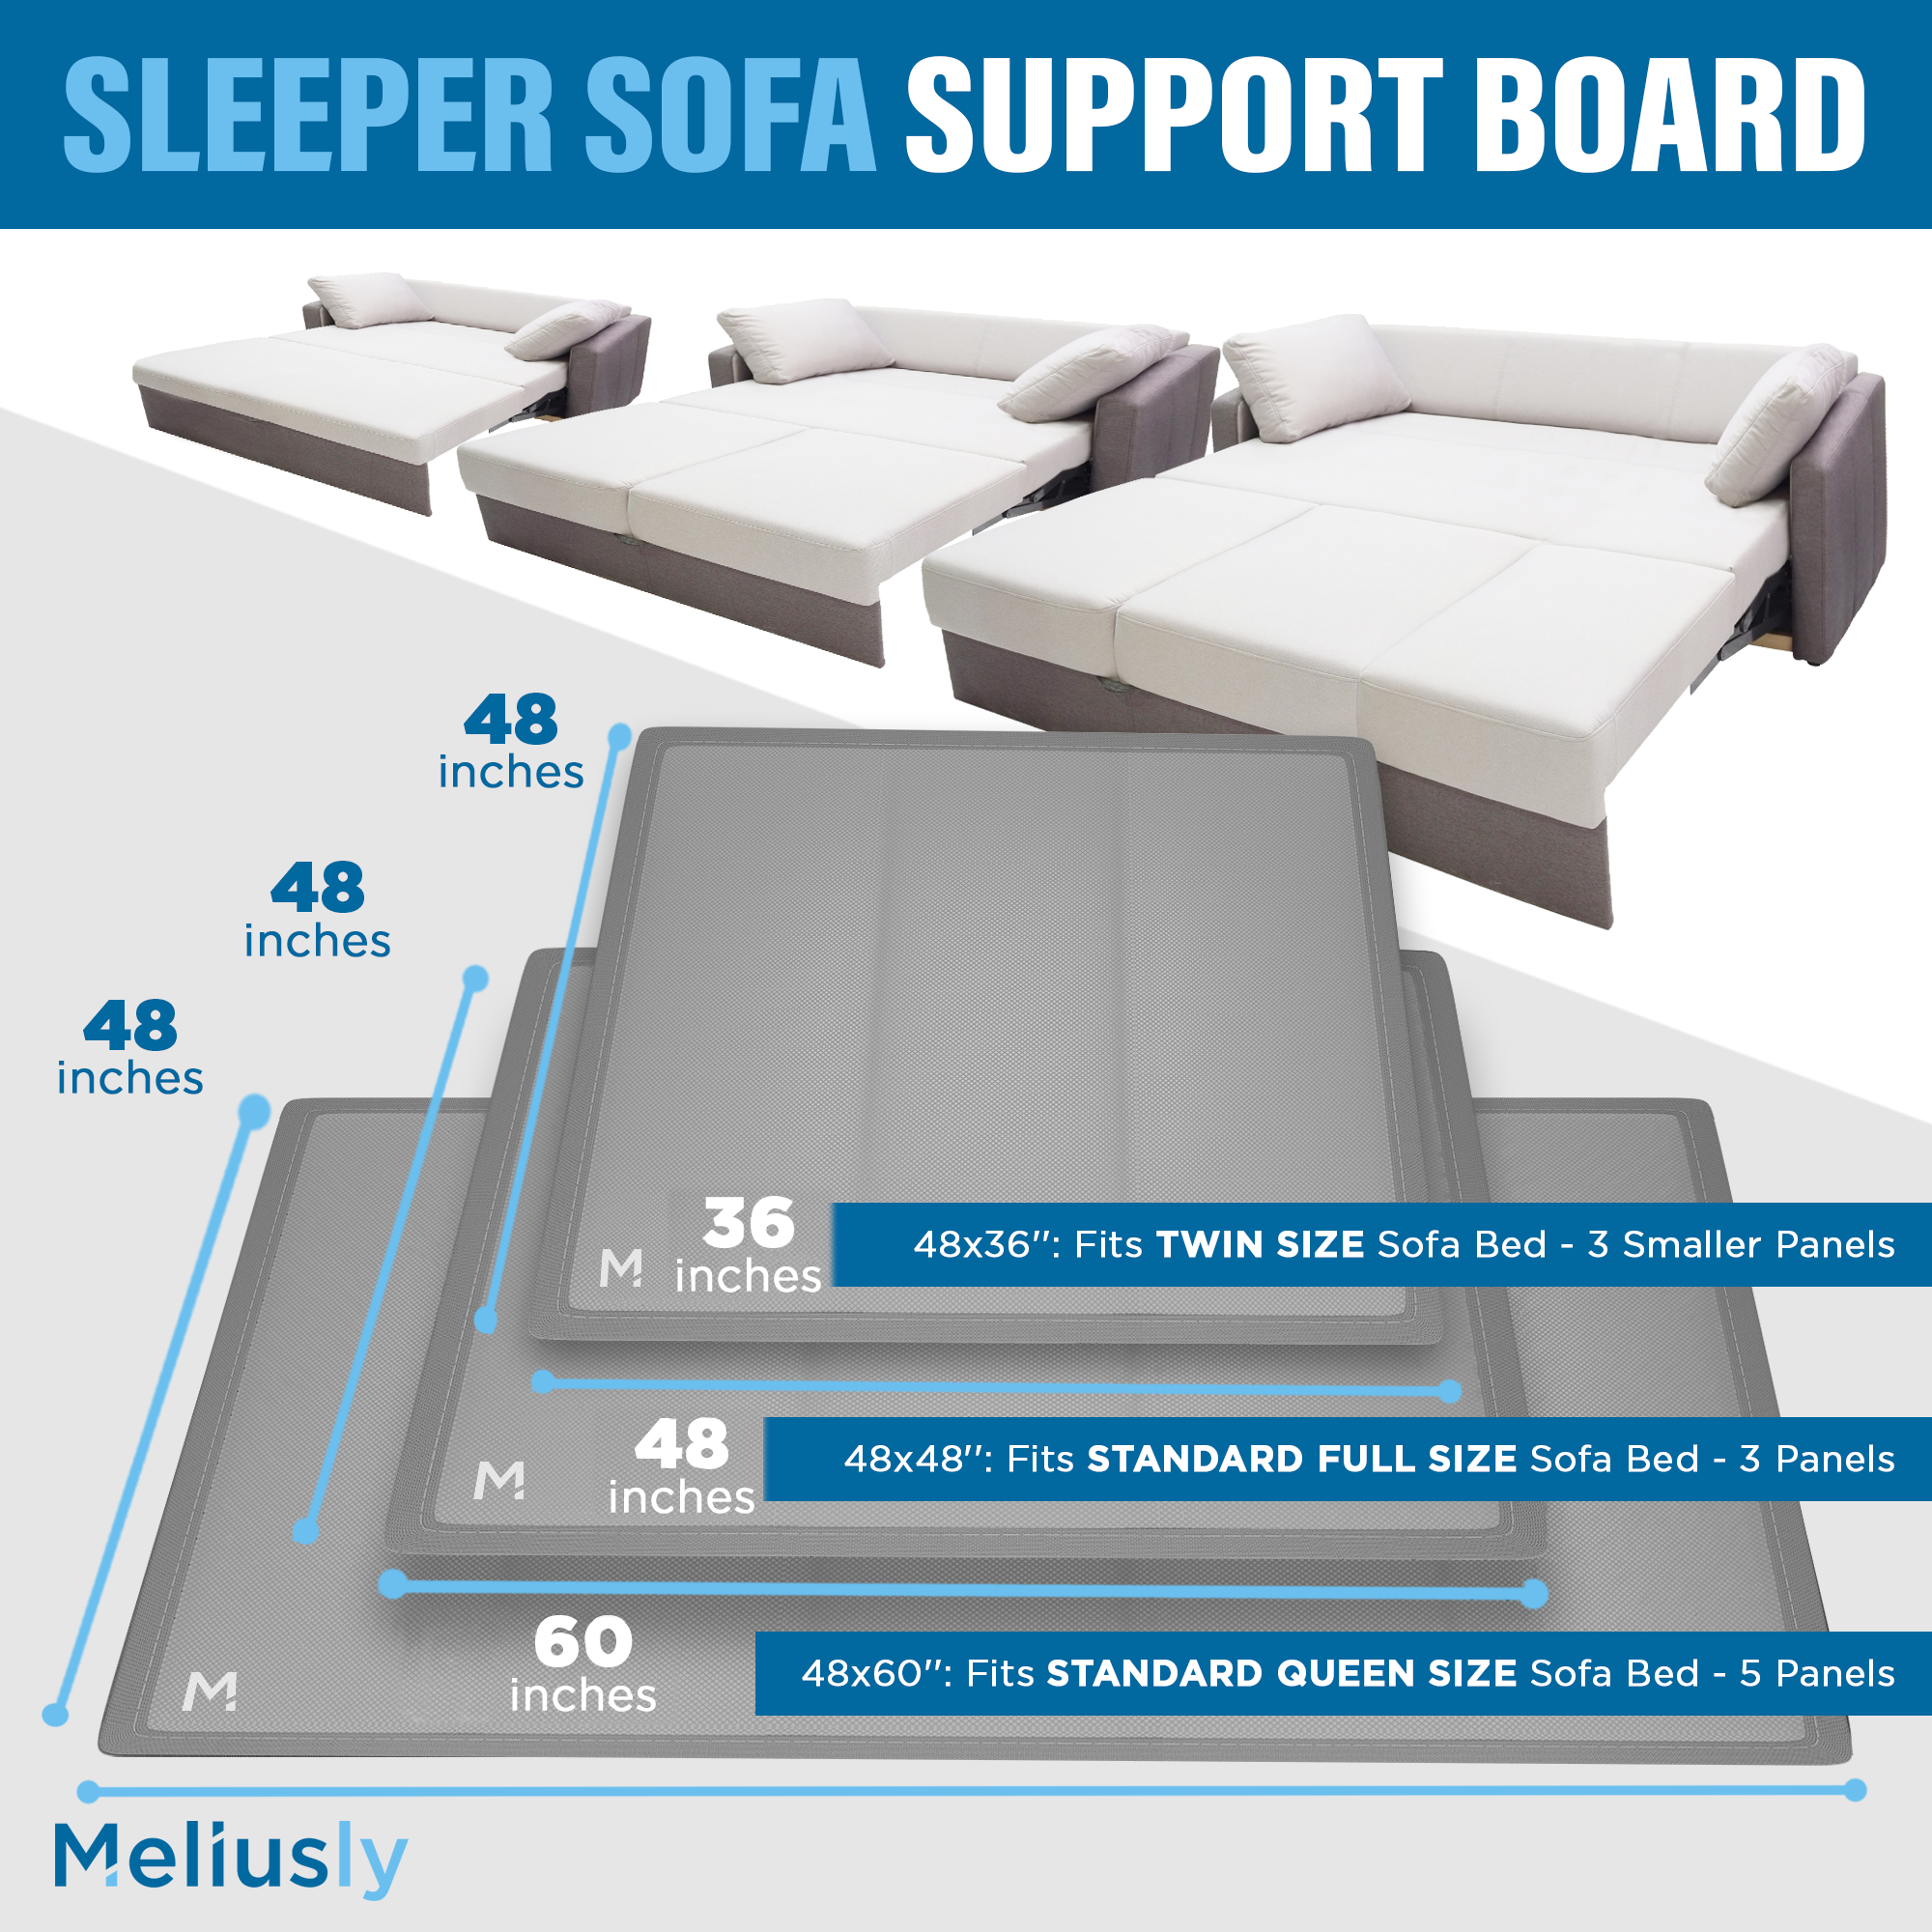 Sleeper Sofa Bed Support Board,Sleeper Sofa Support for Sofa Bed